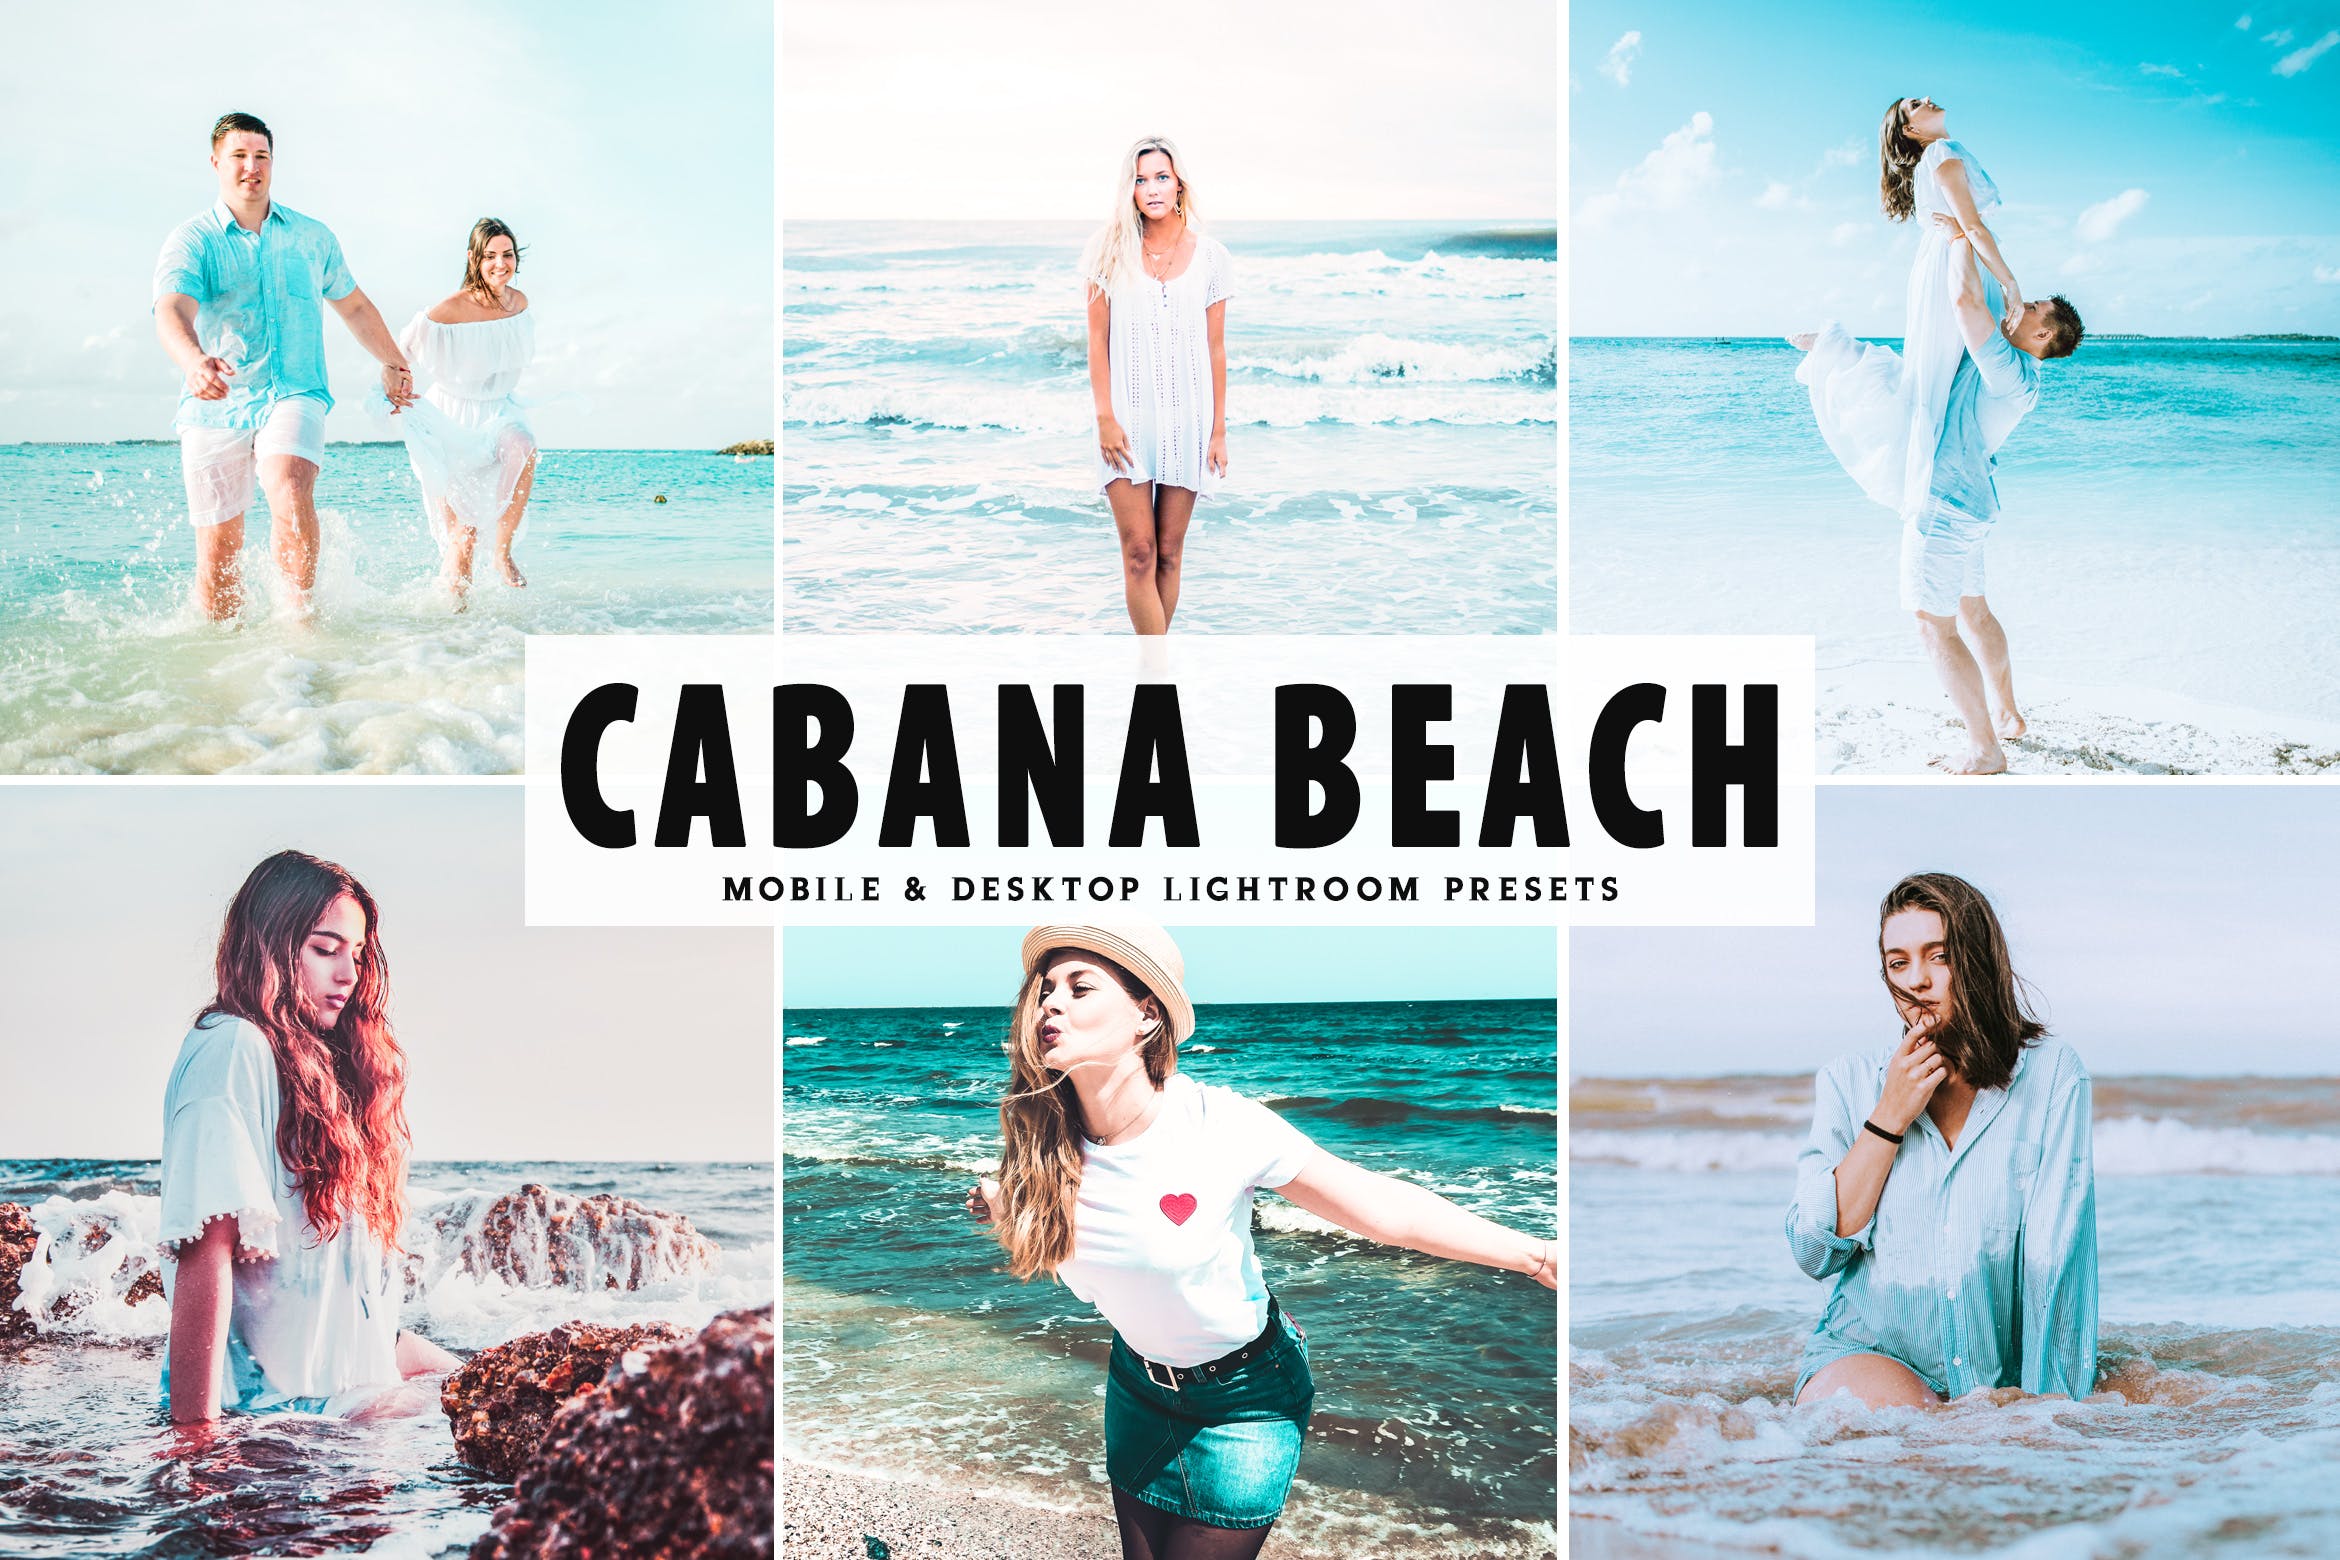 鲜艳色彩&蓝色调滤镜Lightroom预设 Cabana Beach Mobile & Desktop Lightroom Presets插图